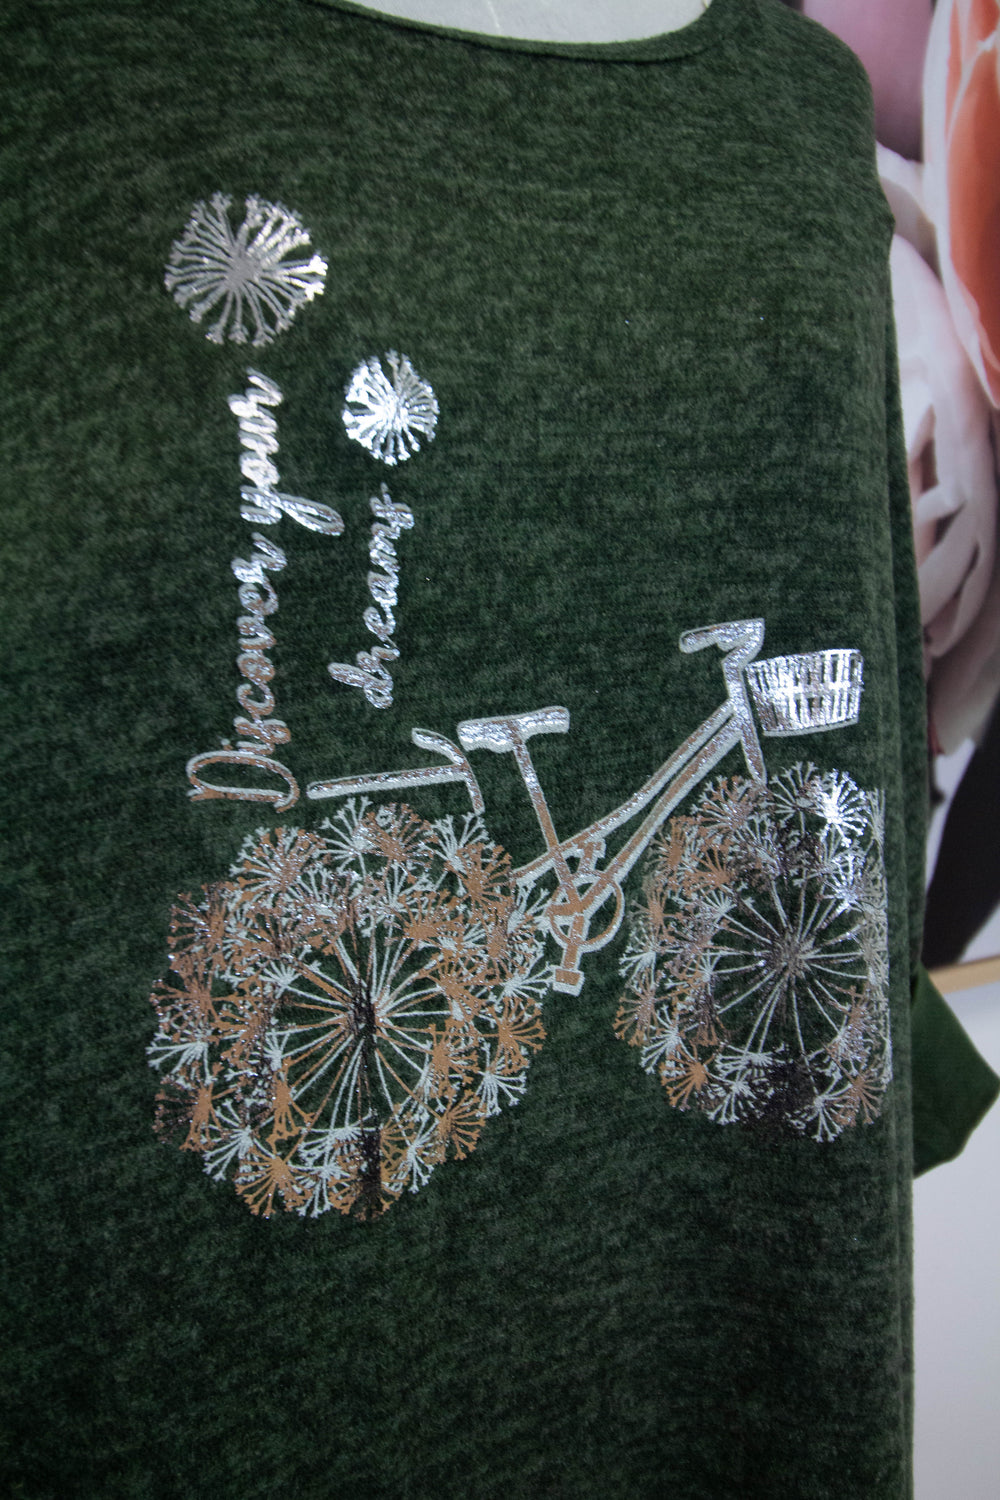 Italian jumper - Bicycle top - Green - close up